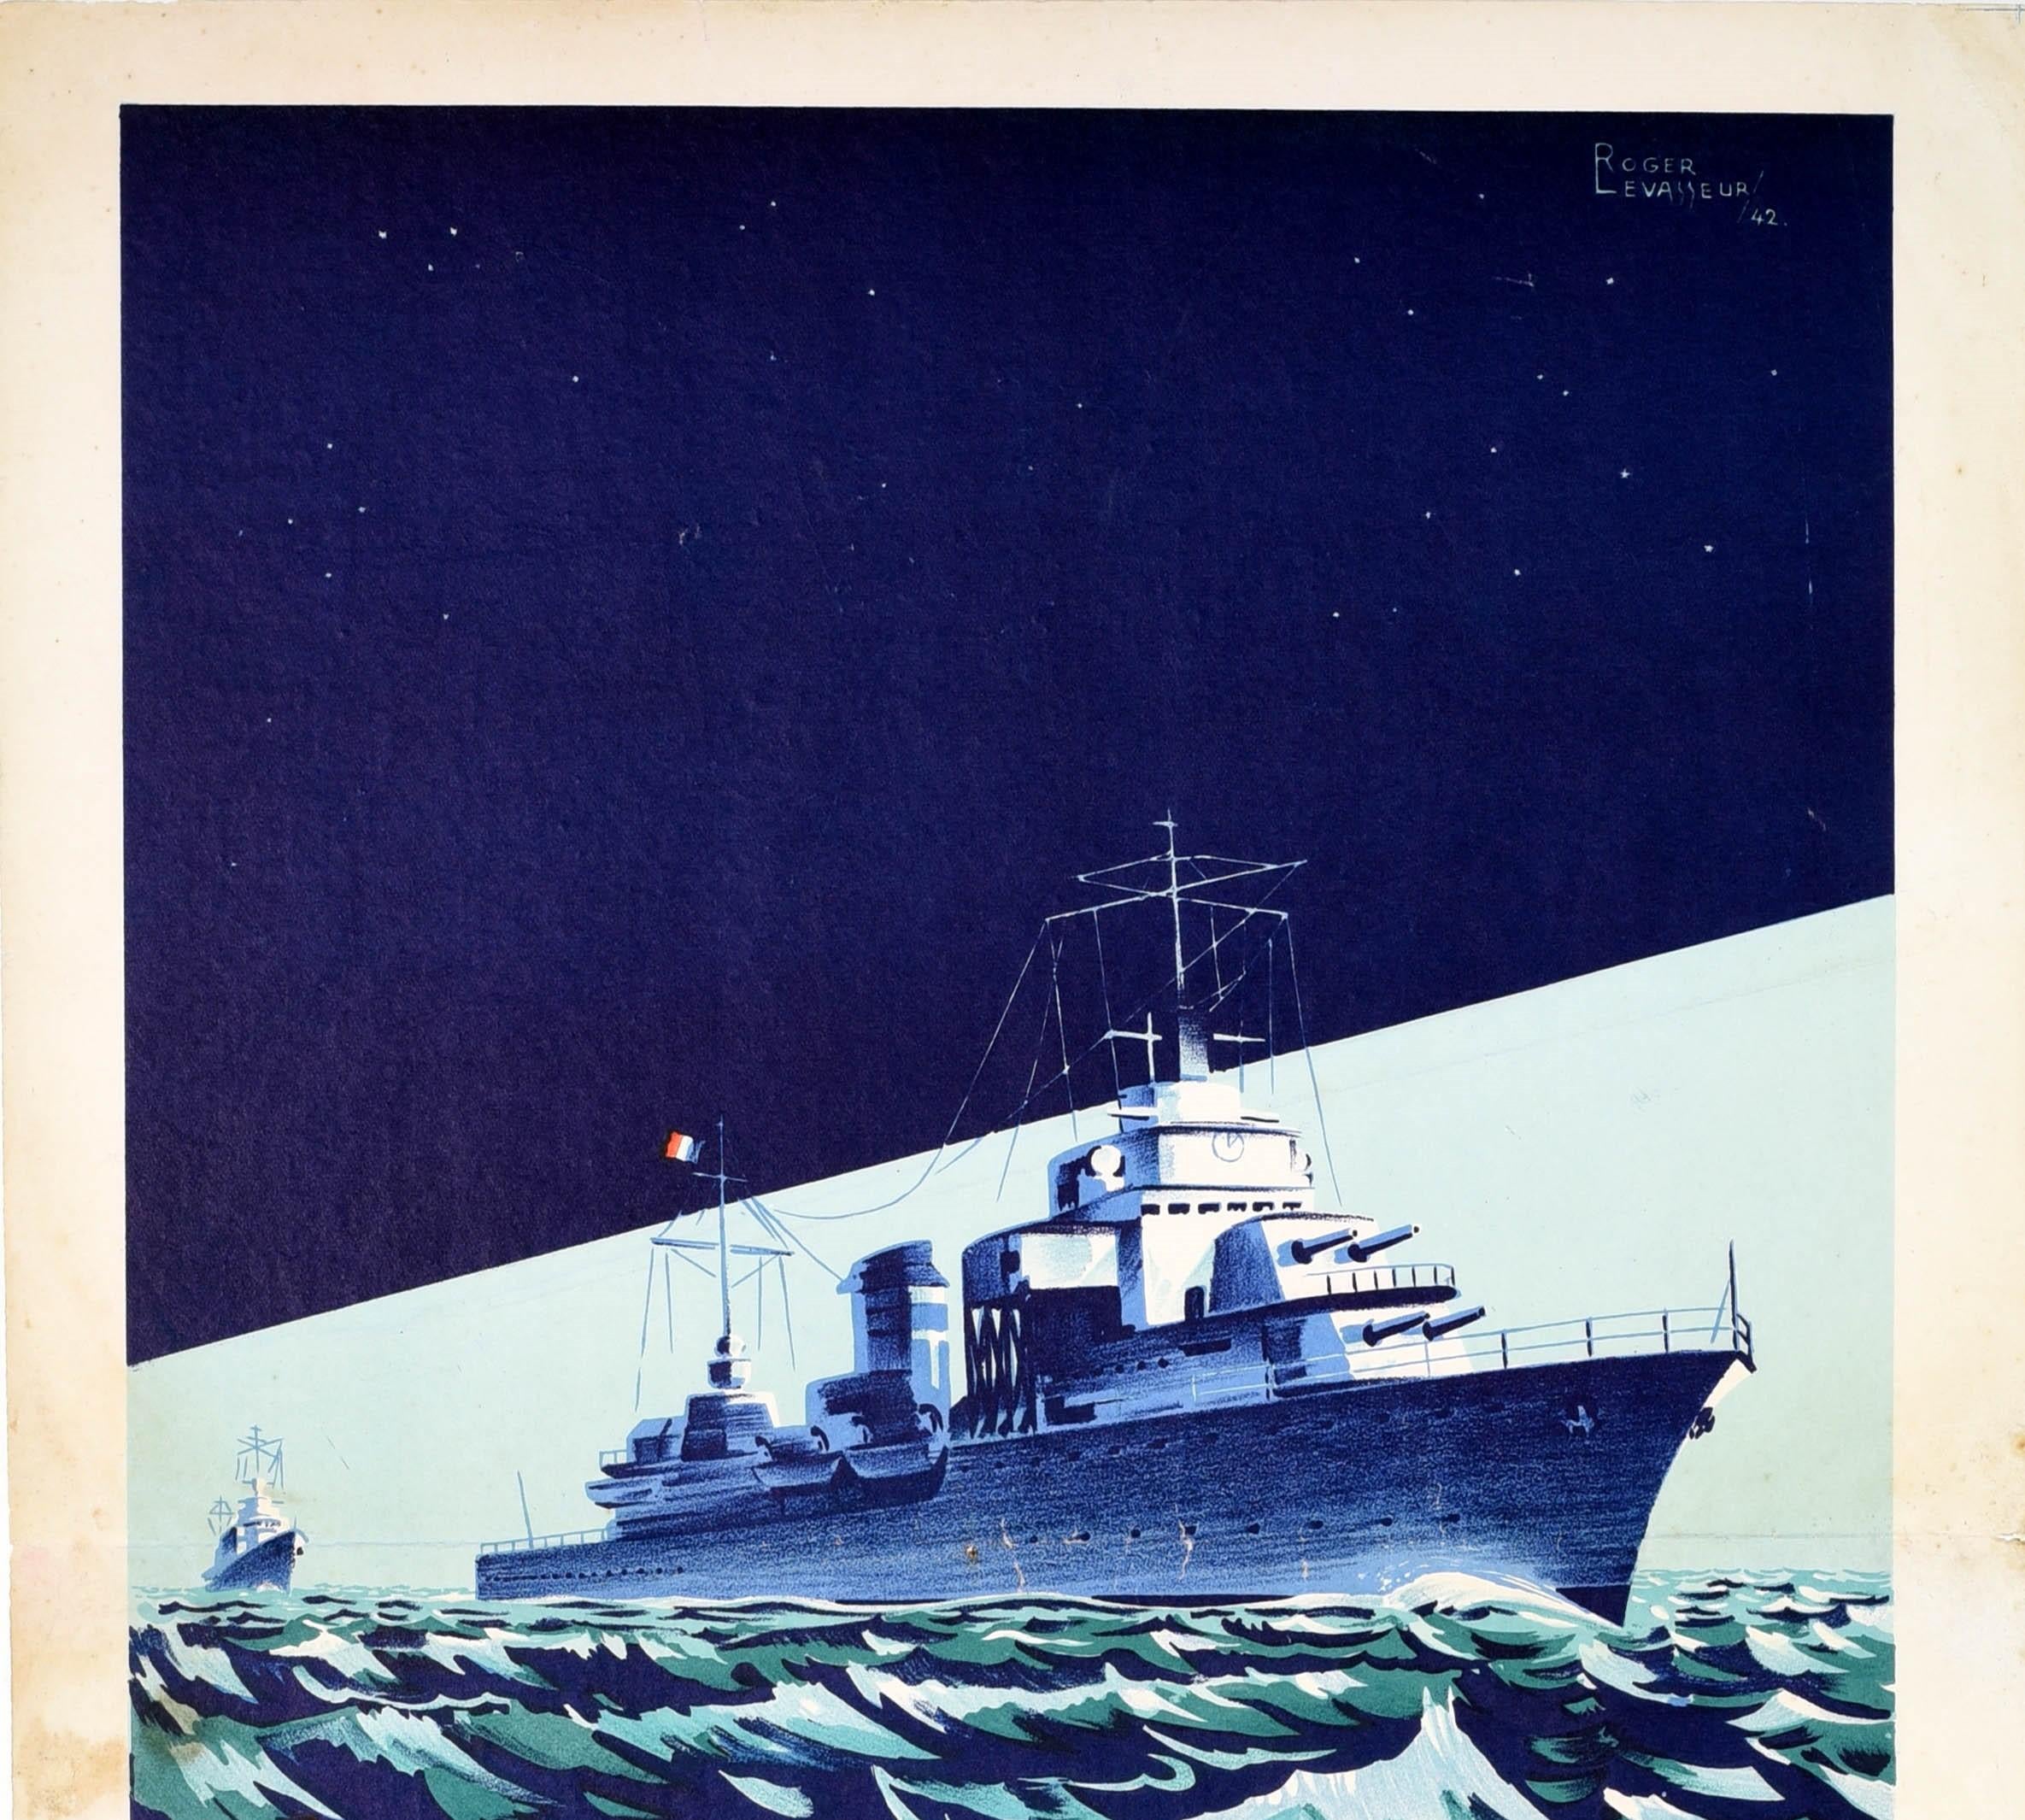 Original Vintage Poster Engagez Vous Dans La Marine French Navy Recruitment WWII - Print by Roger Levasseur